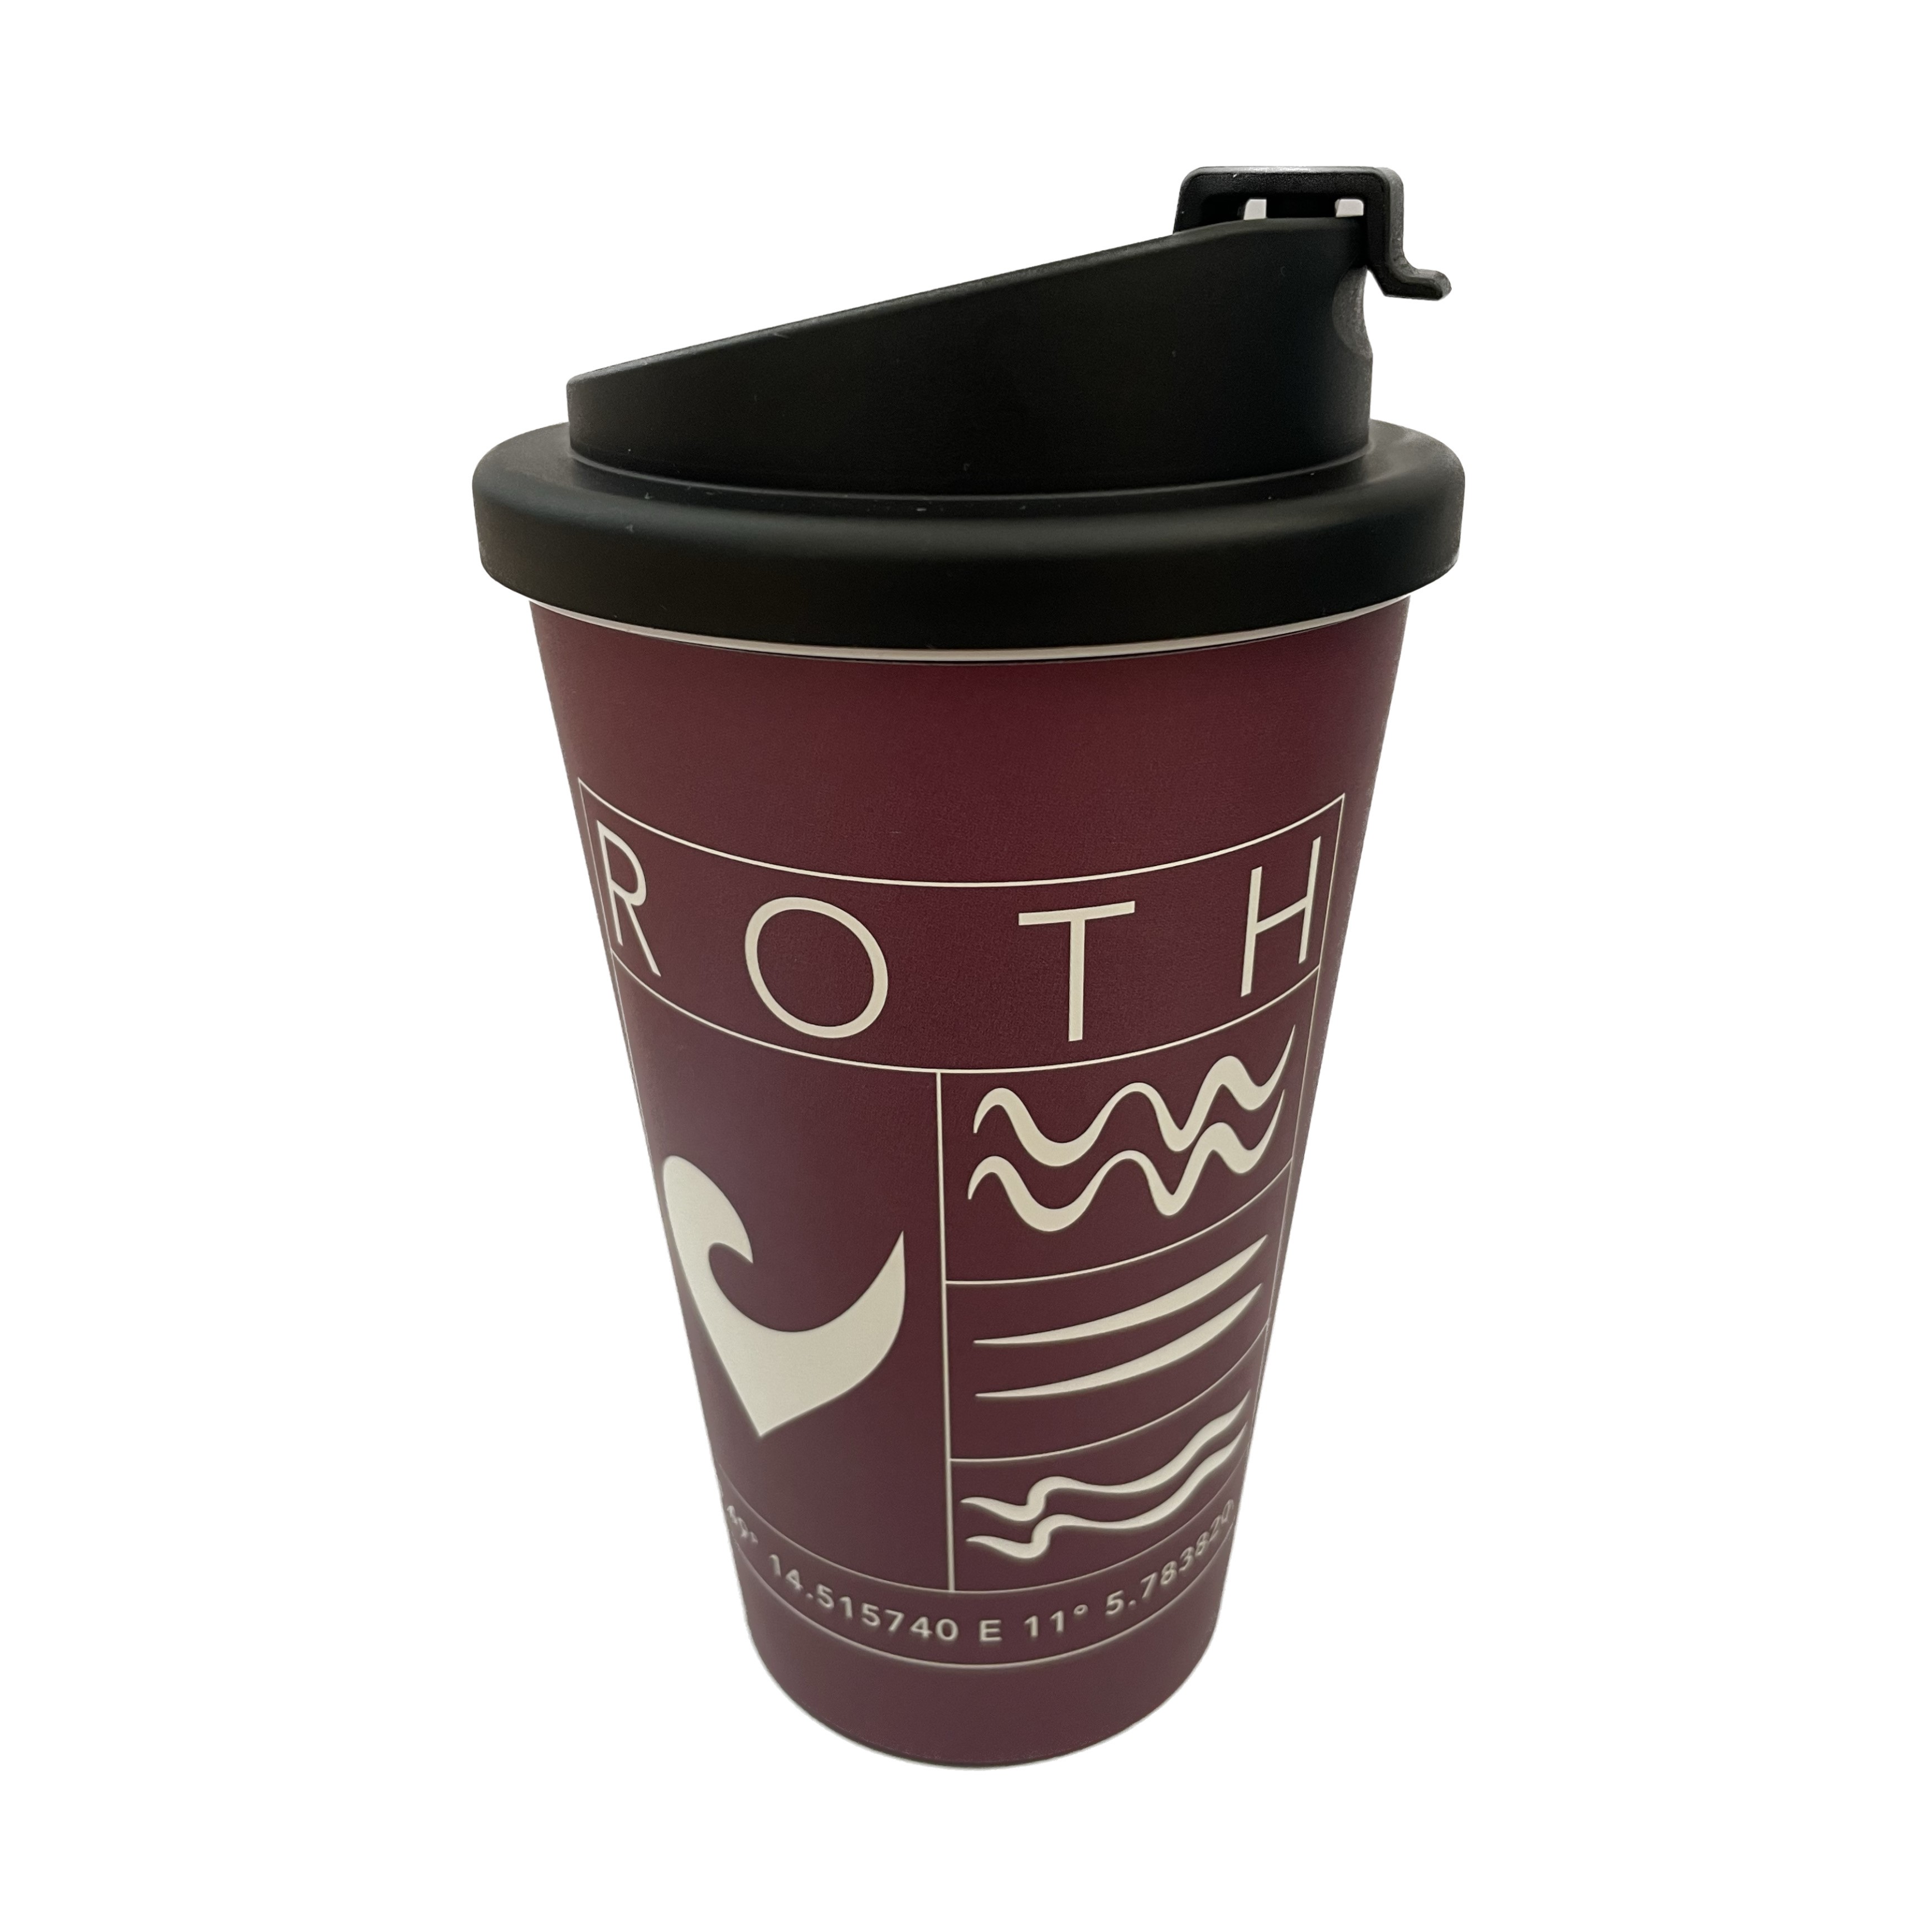 Coffee-to-go mug "Premium Deluxe" Challenge Roth reusable